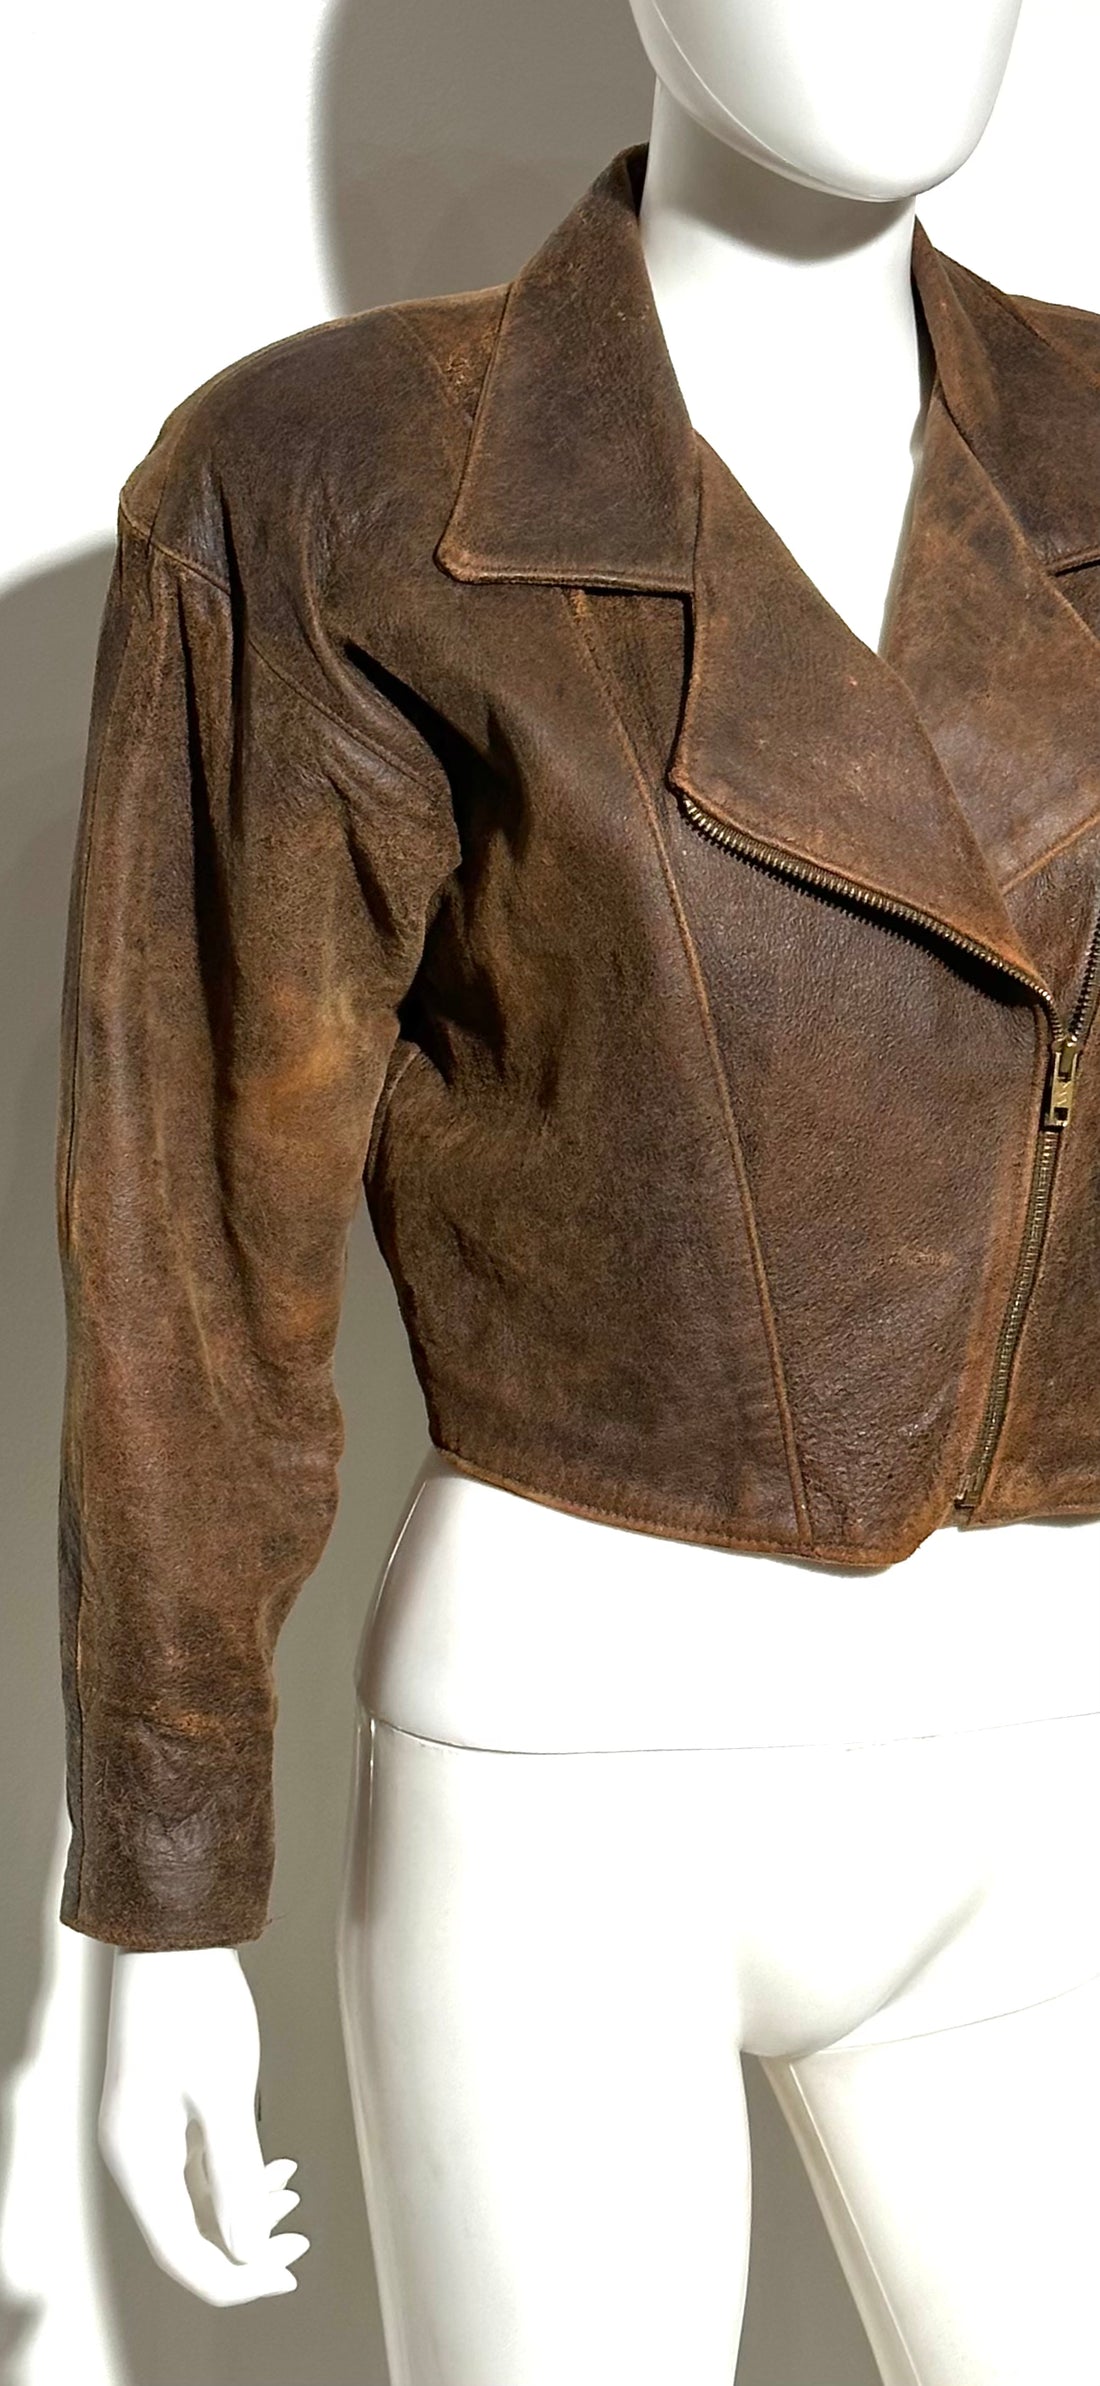 Firenze Leather Jacket